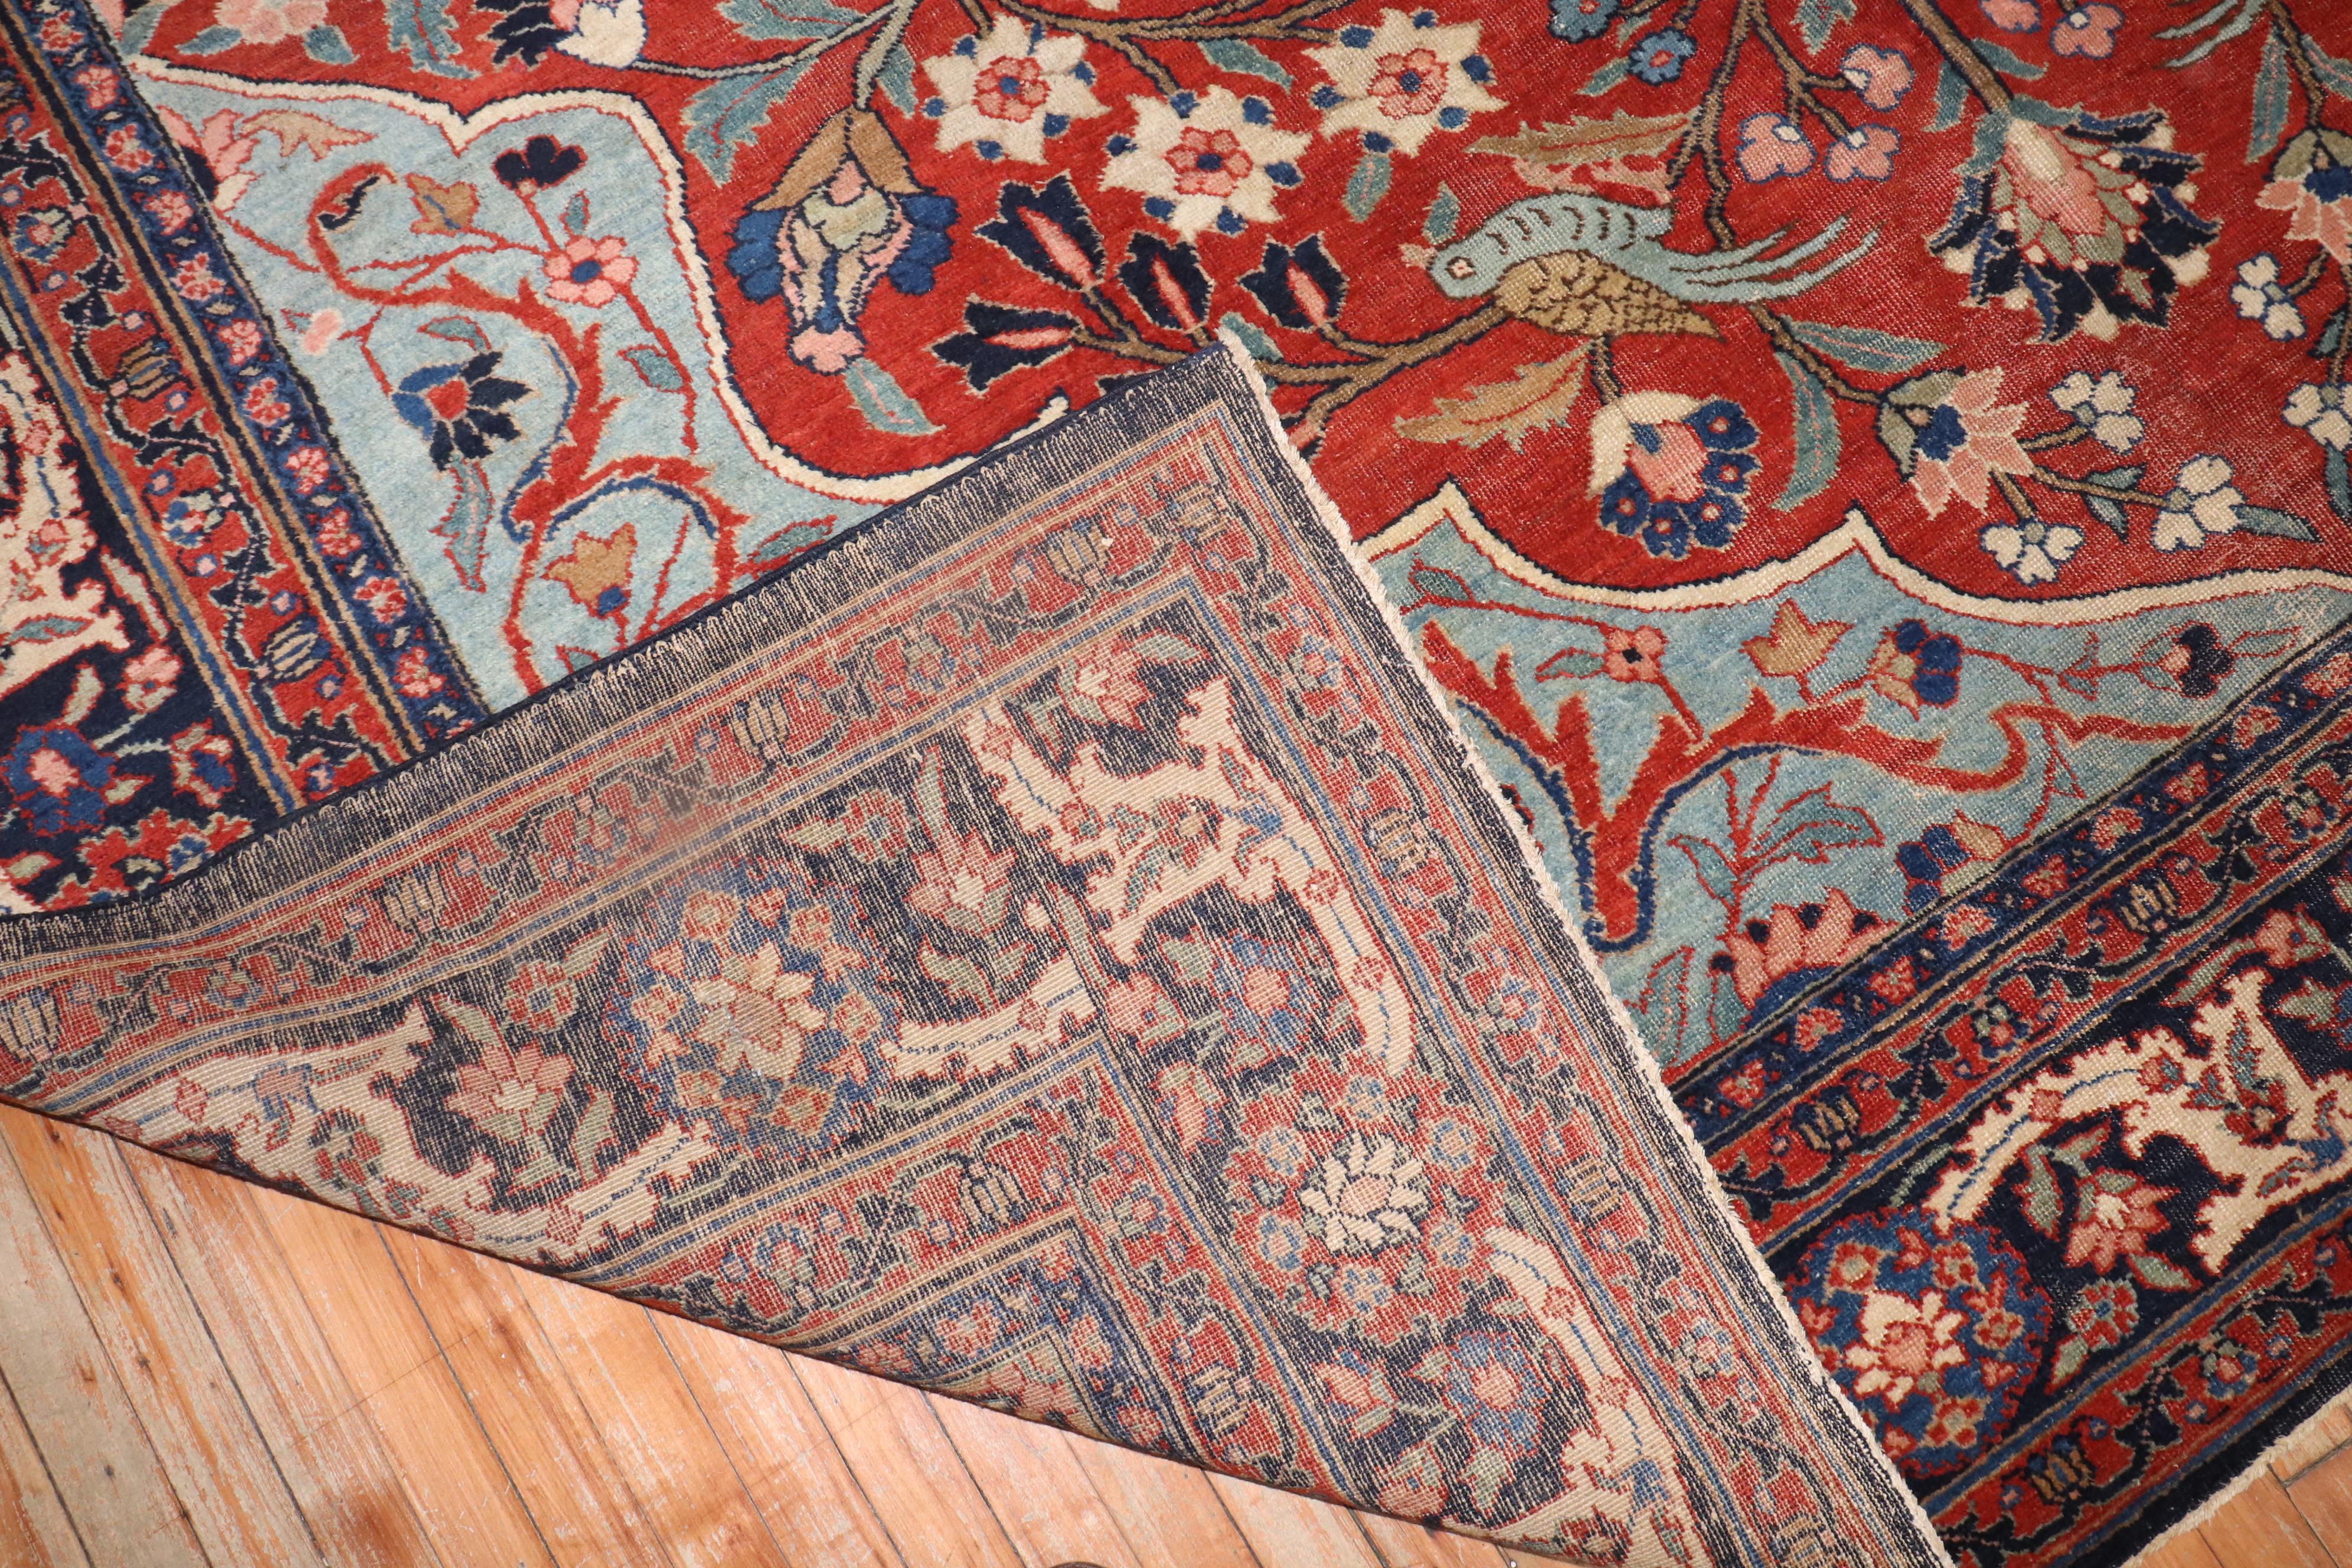 20th Century Pictorial Antique Persian Tabriz Carpet For Sale